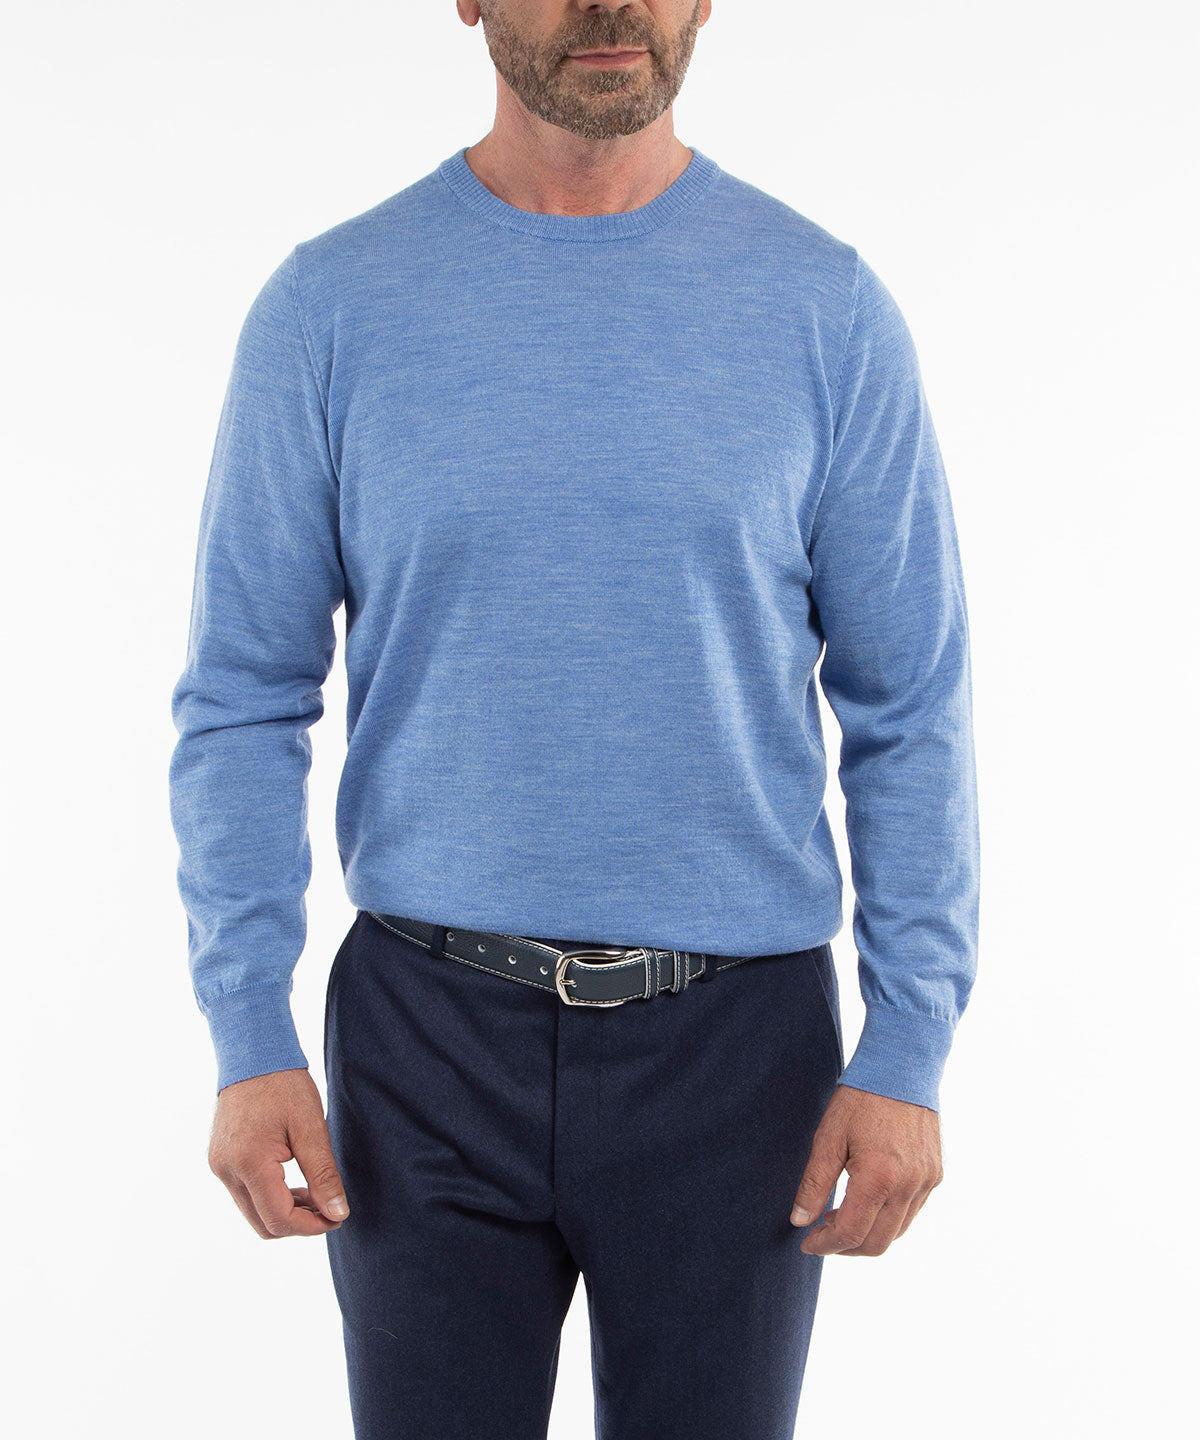 Men's Merino Wool Crew Neck Sweater: Blue-Grey – BBC Shop US